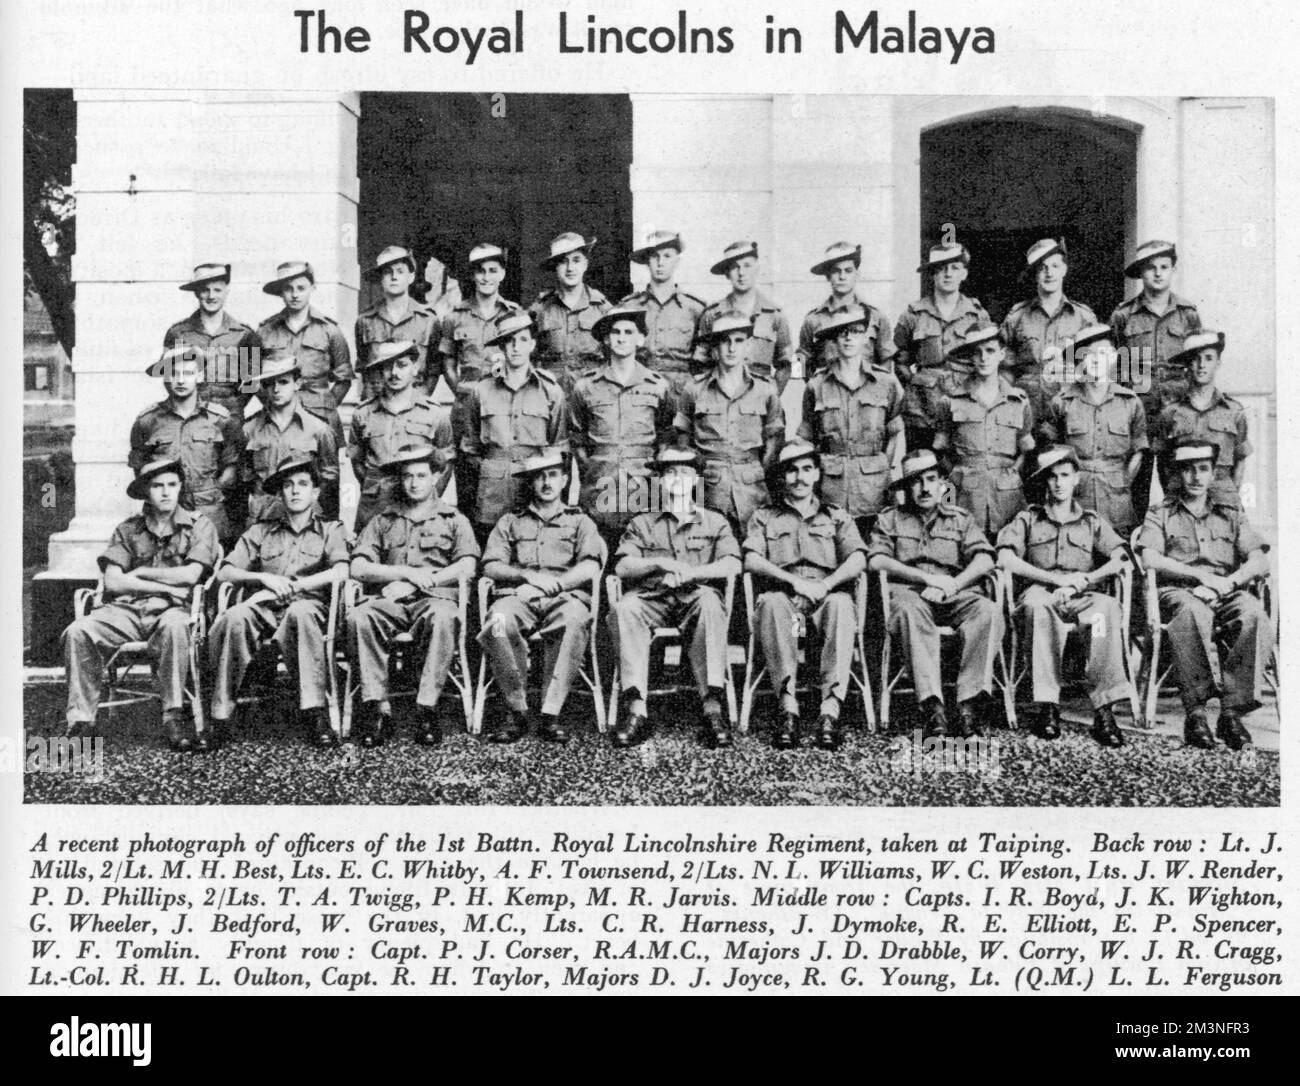 Una fotografia di ufficiali del reggimento Royal Lincolnshire del 1st scattata a Taiping. Indietro: Lt. J. Mills, 2/Lt. M.H. Migliore, LTS. E.C. Whitby, A.F. Townsend, 2/LTS N.L. Williams, W.C. Weston, LTS. J.W. Rendering, P.D. Phillips, 2/LTS. T.A .Twig, P.H. Kemp, M.R. Jarvis. Riga centrale: Capts. I.R. Boyd, J.K Wighton, G. Wheeler, J. Bedford, W.Graves, C.C., LTS. C.R. Cablaggio, J. Dymoke, R.E. Elliott, E.P. Spencer, W.F. Tomlin. Prima fila: Cap. P.J. Corser, R.A.M.C., Majors J.D Drabble, W.Corry, W.J.R. Cragg, Lt-col R.H.L. Oulton, Capt. R.H Taylor, Majors D.J. Joyce, R.G. Young, Lt.(Q.M.) L.L. Foto Stock